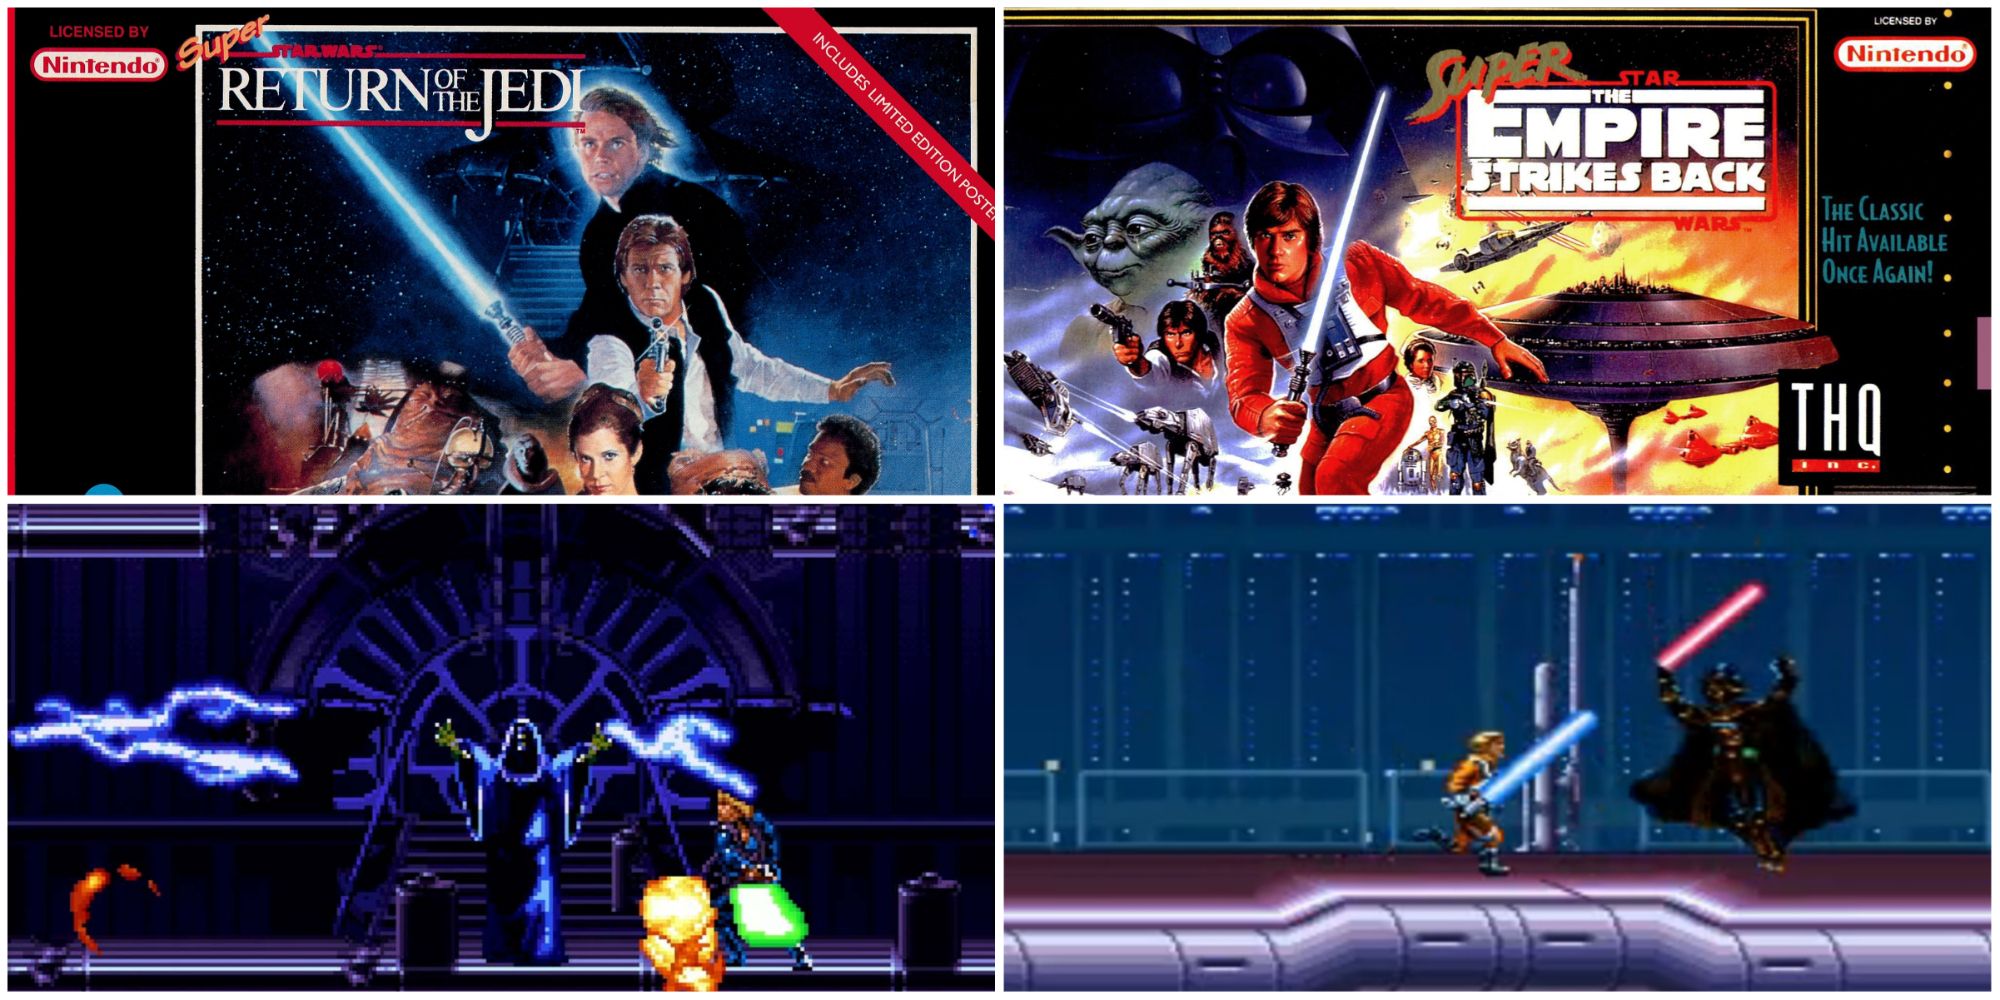 Super Return Of The Jedi Cover Art & Gameplay & Super Empire Strikes Back Cover Art & Gameplay